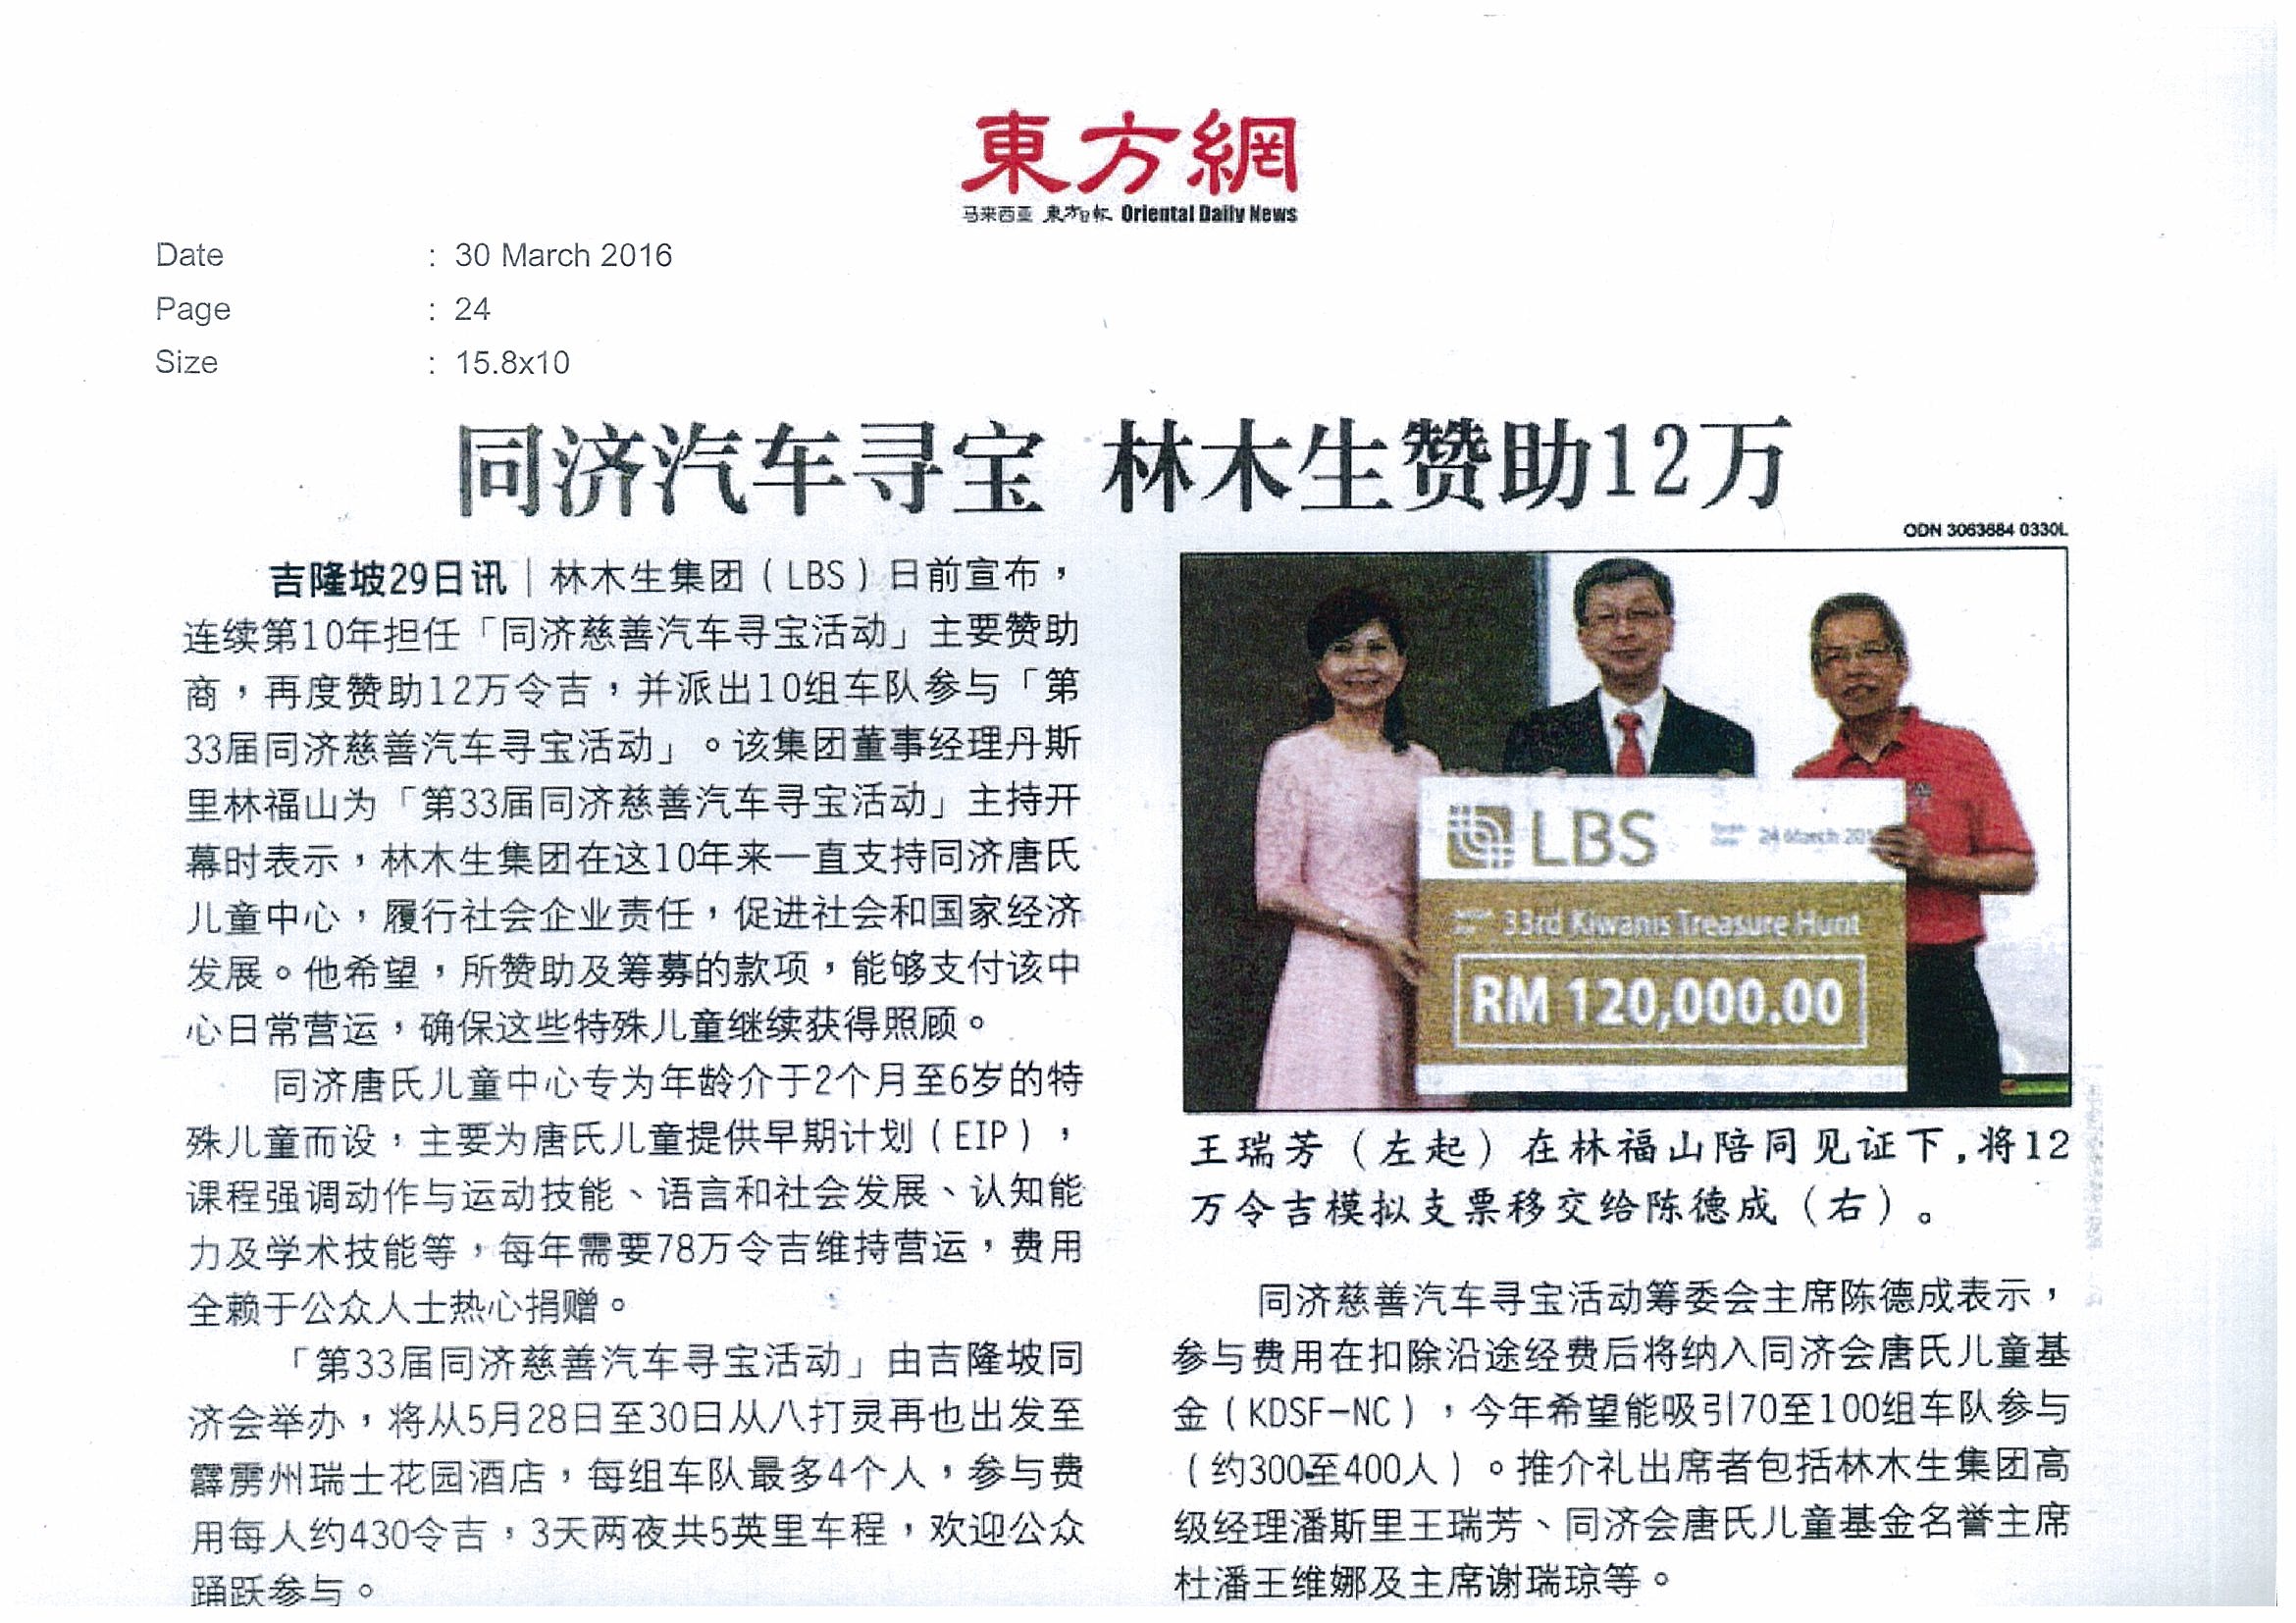 2016.03.30 Oriental Daily – LBS Bina Group sponsors RM120,000 for Kiwanis treasure hunt